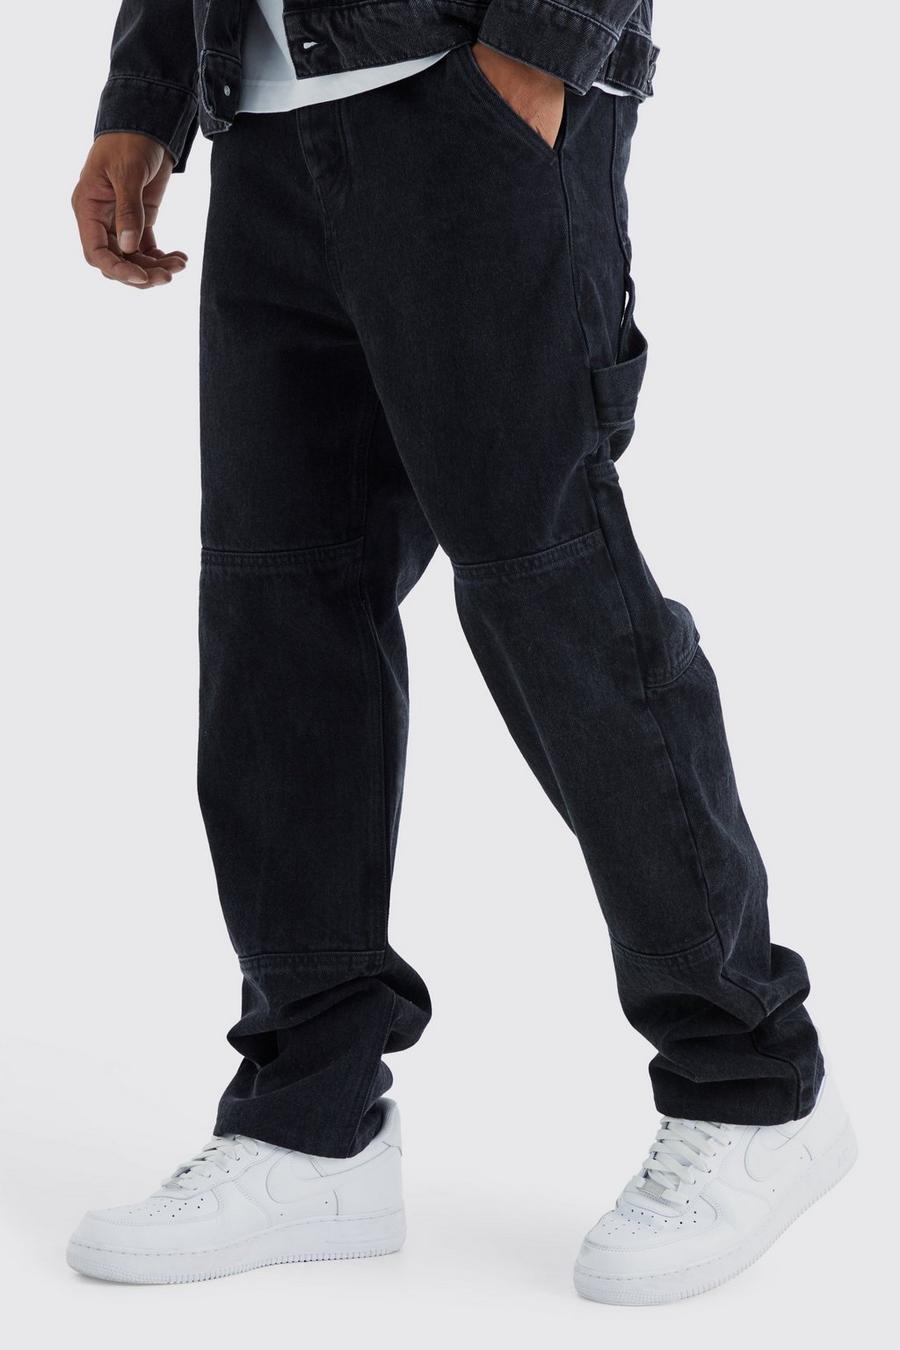 Jeans rilassati stile Carpenter con cavallo basso, Washed black image number 1